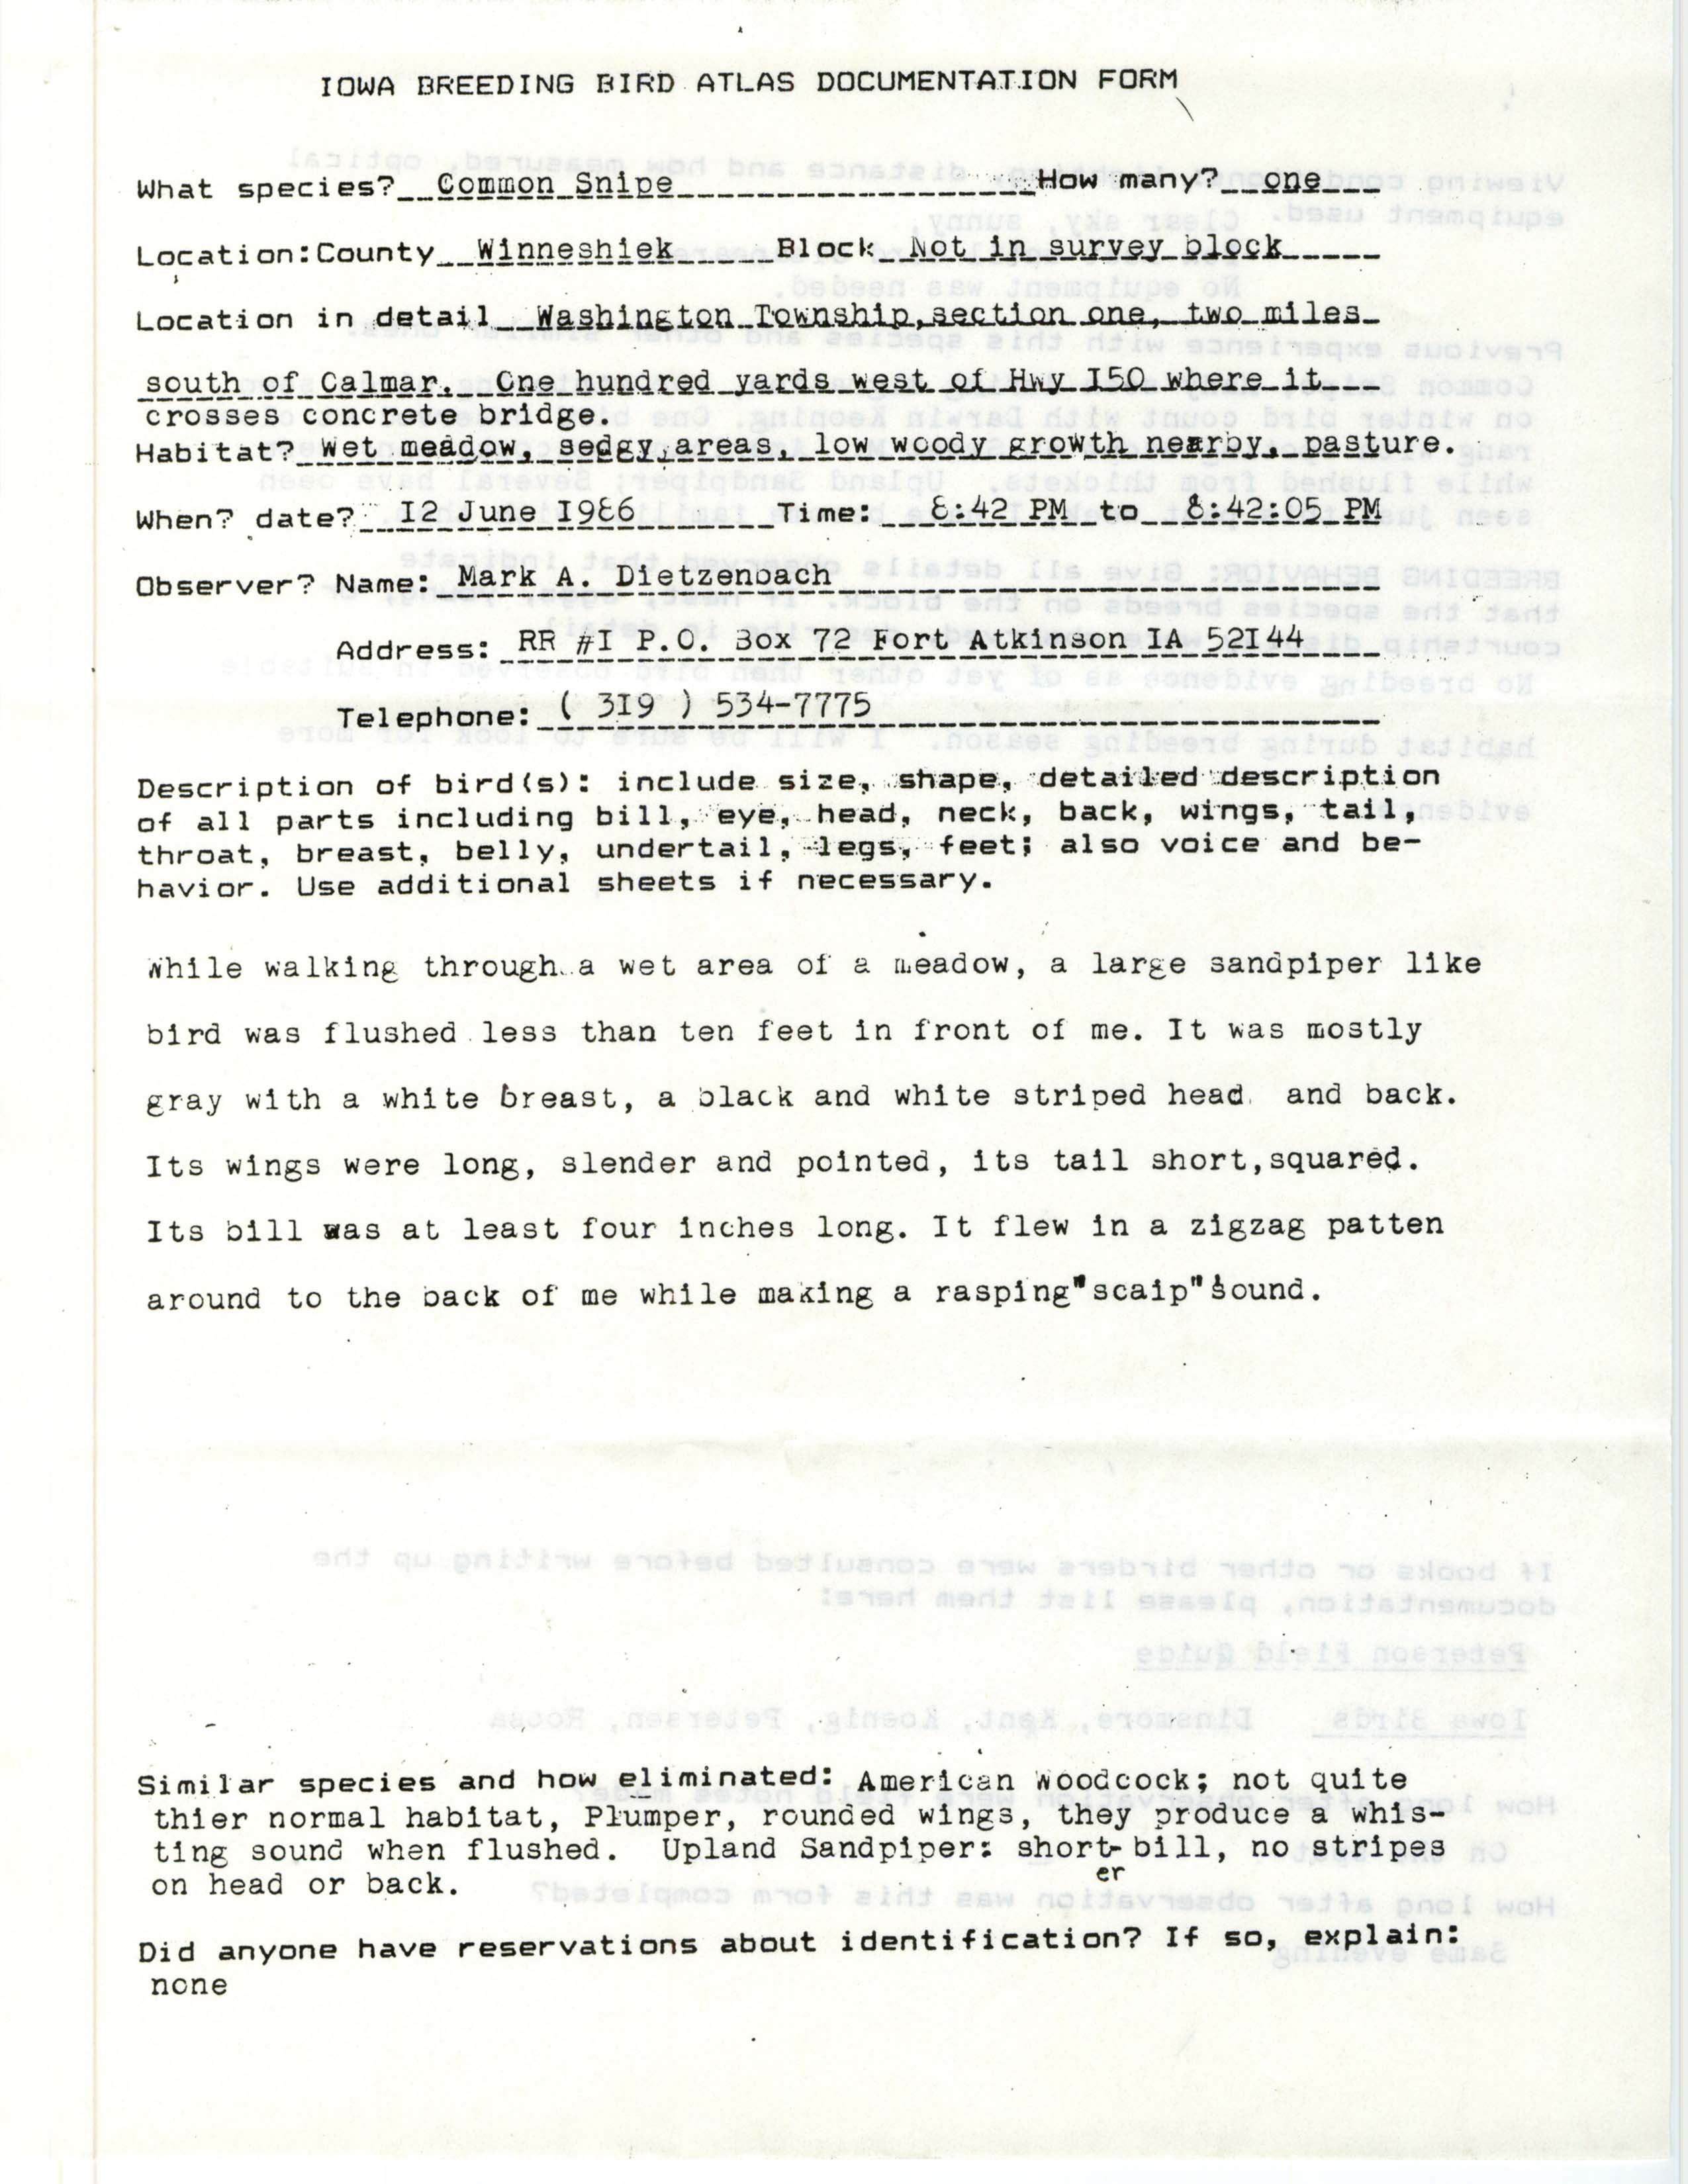 Rare bird documentation form for Common Snipe at Washington Township, 1986